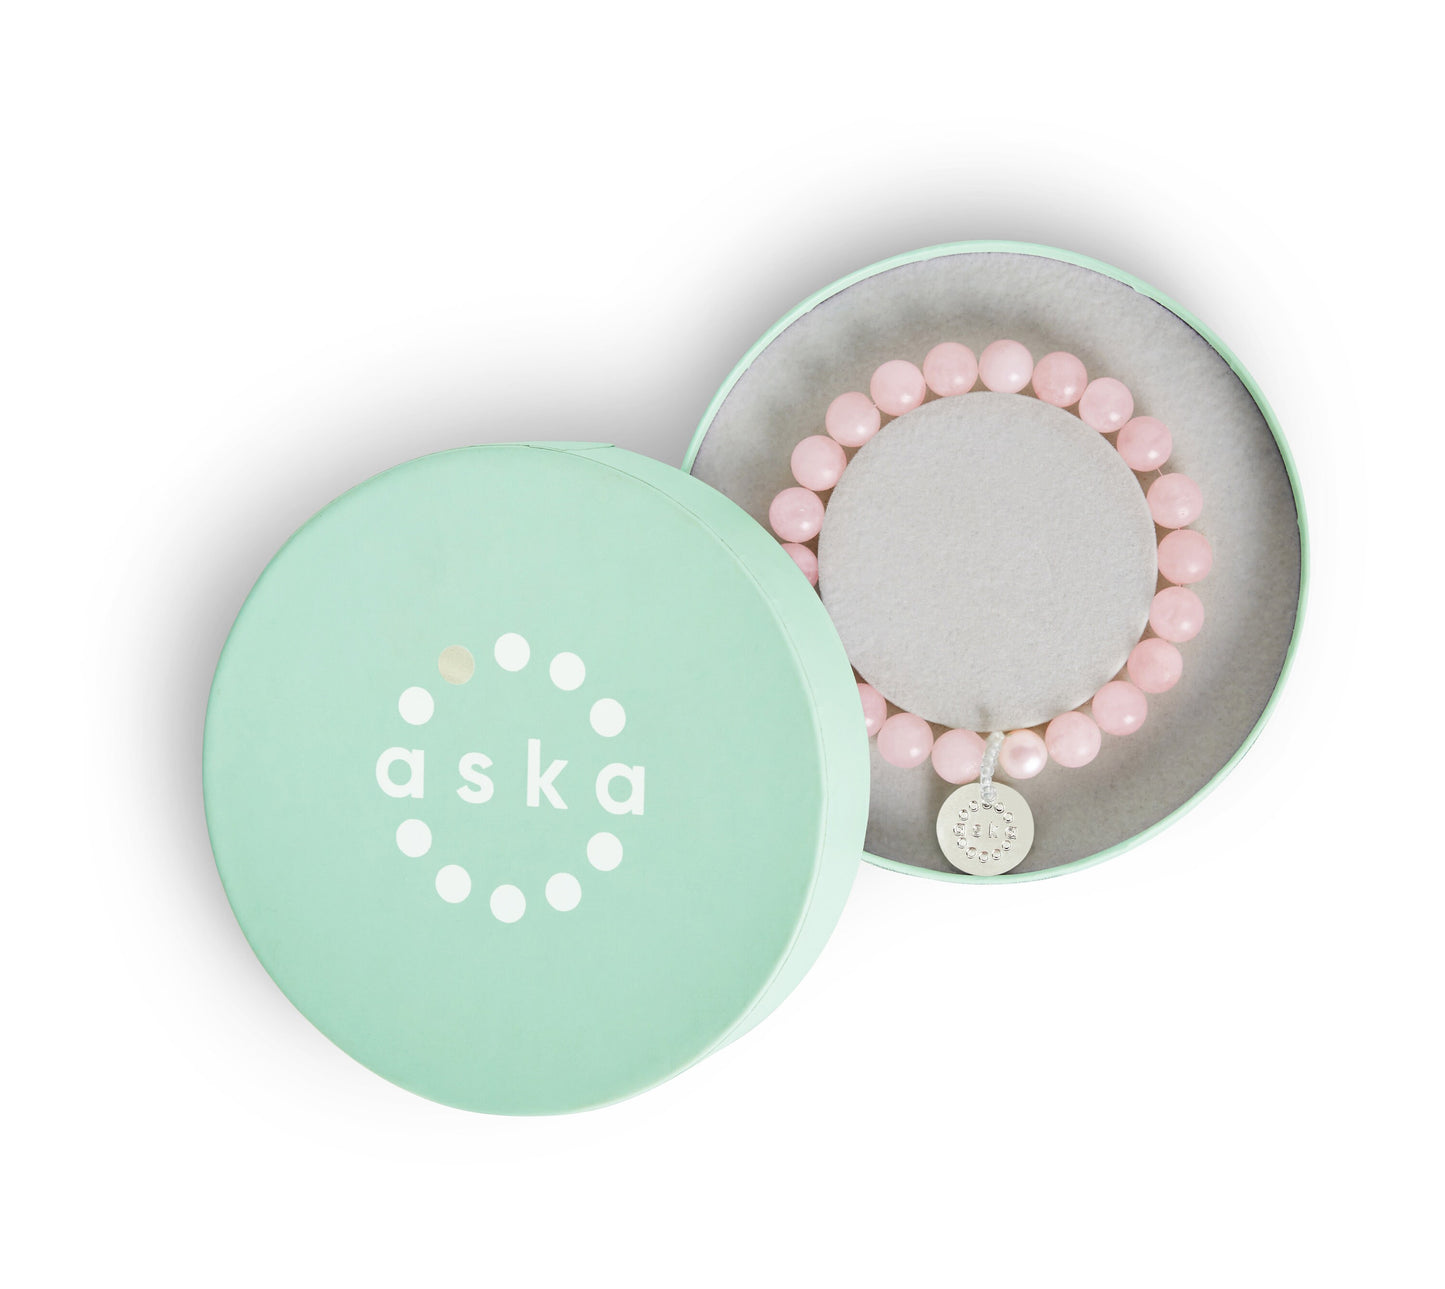 Aska Maternity Movement Bracelet in rose quartz with sterling silver pendant